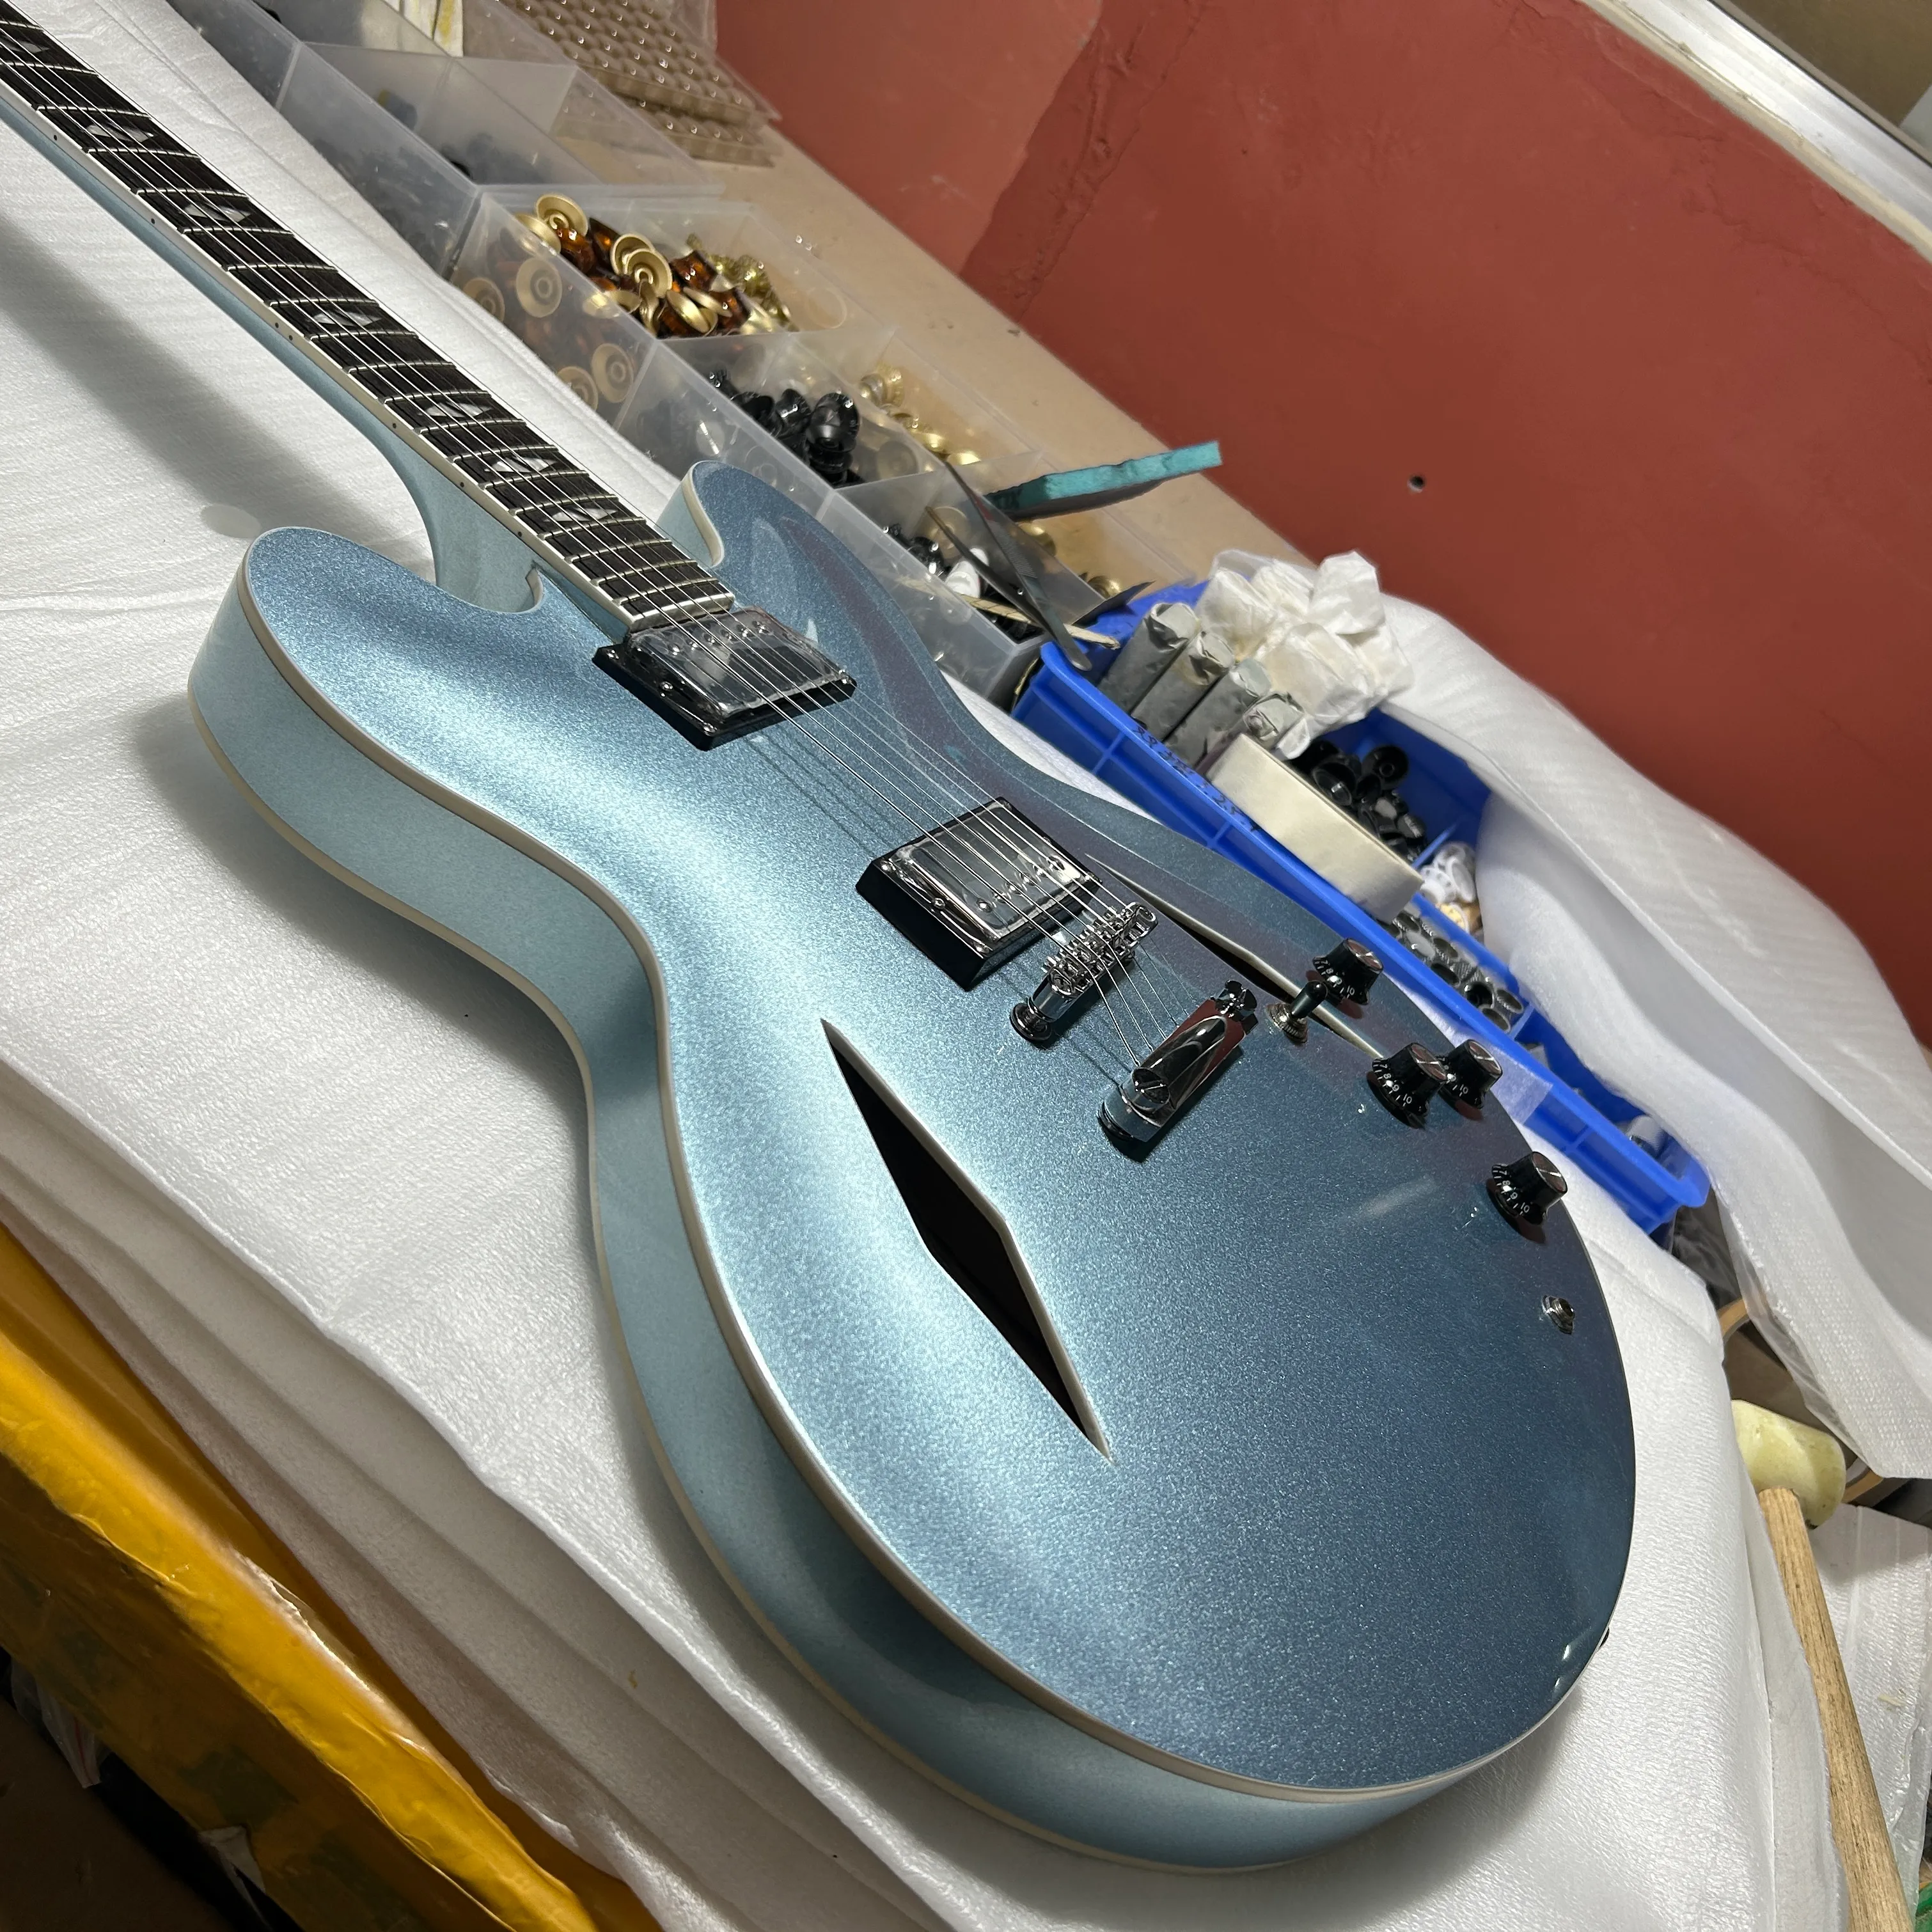 335 electric guitar rosewood fretboard white hollow body guitar metallic bule color chrome hardware 6 strings guitarra free shipping